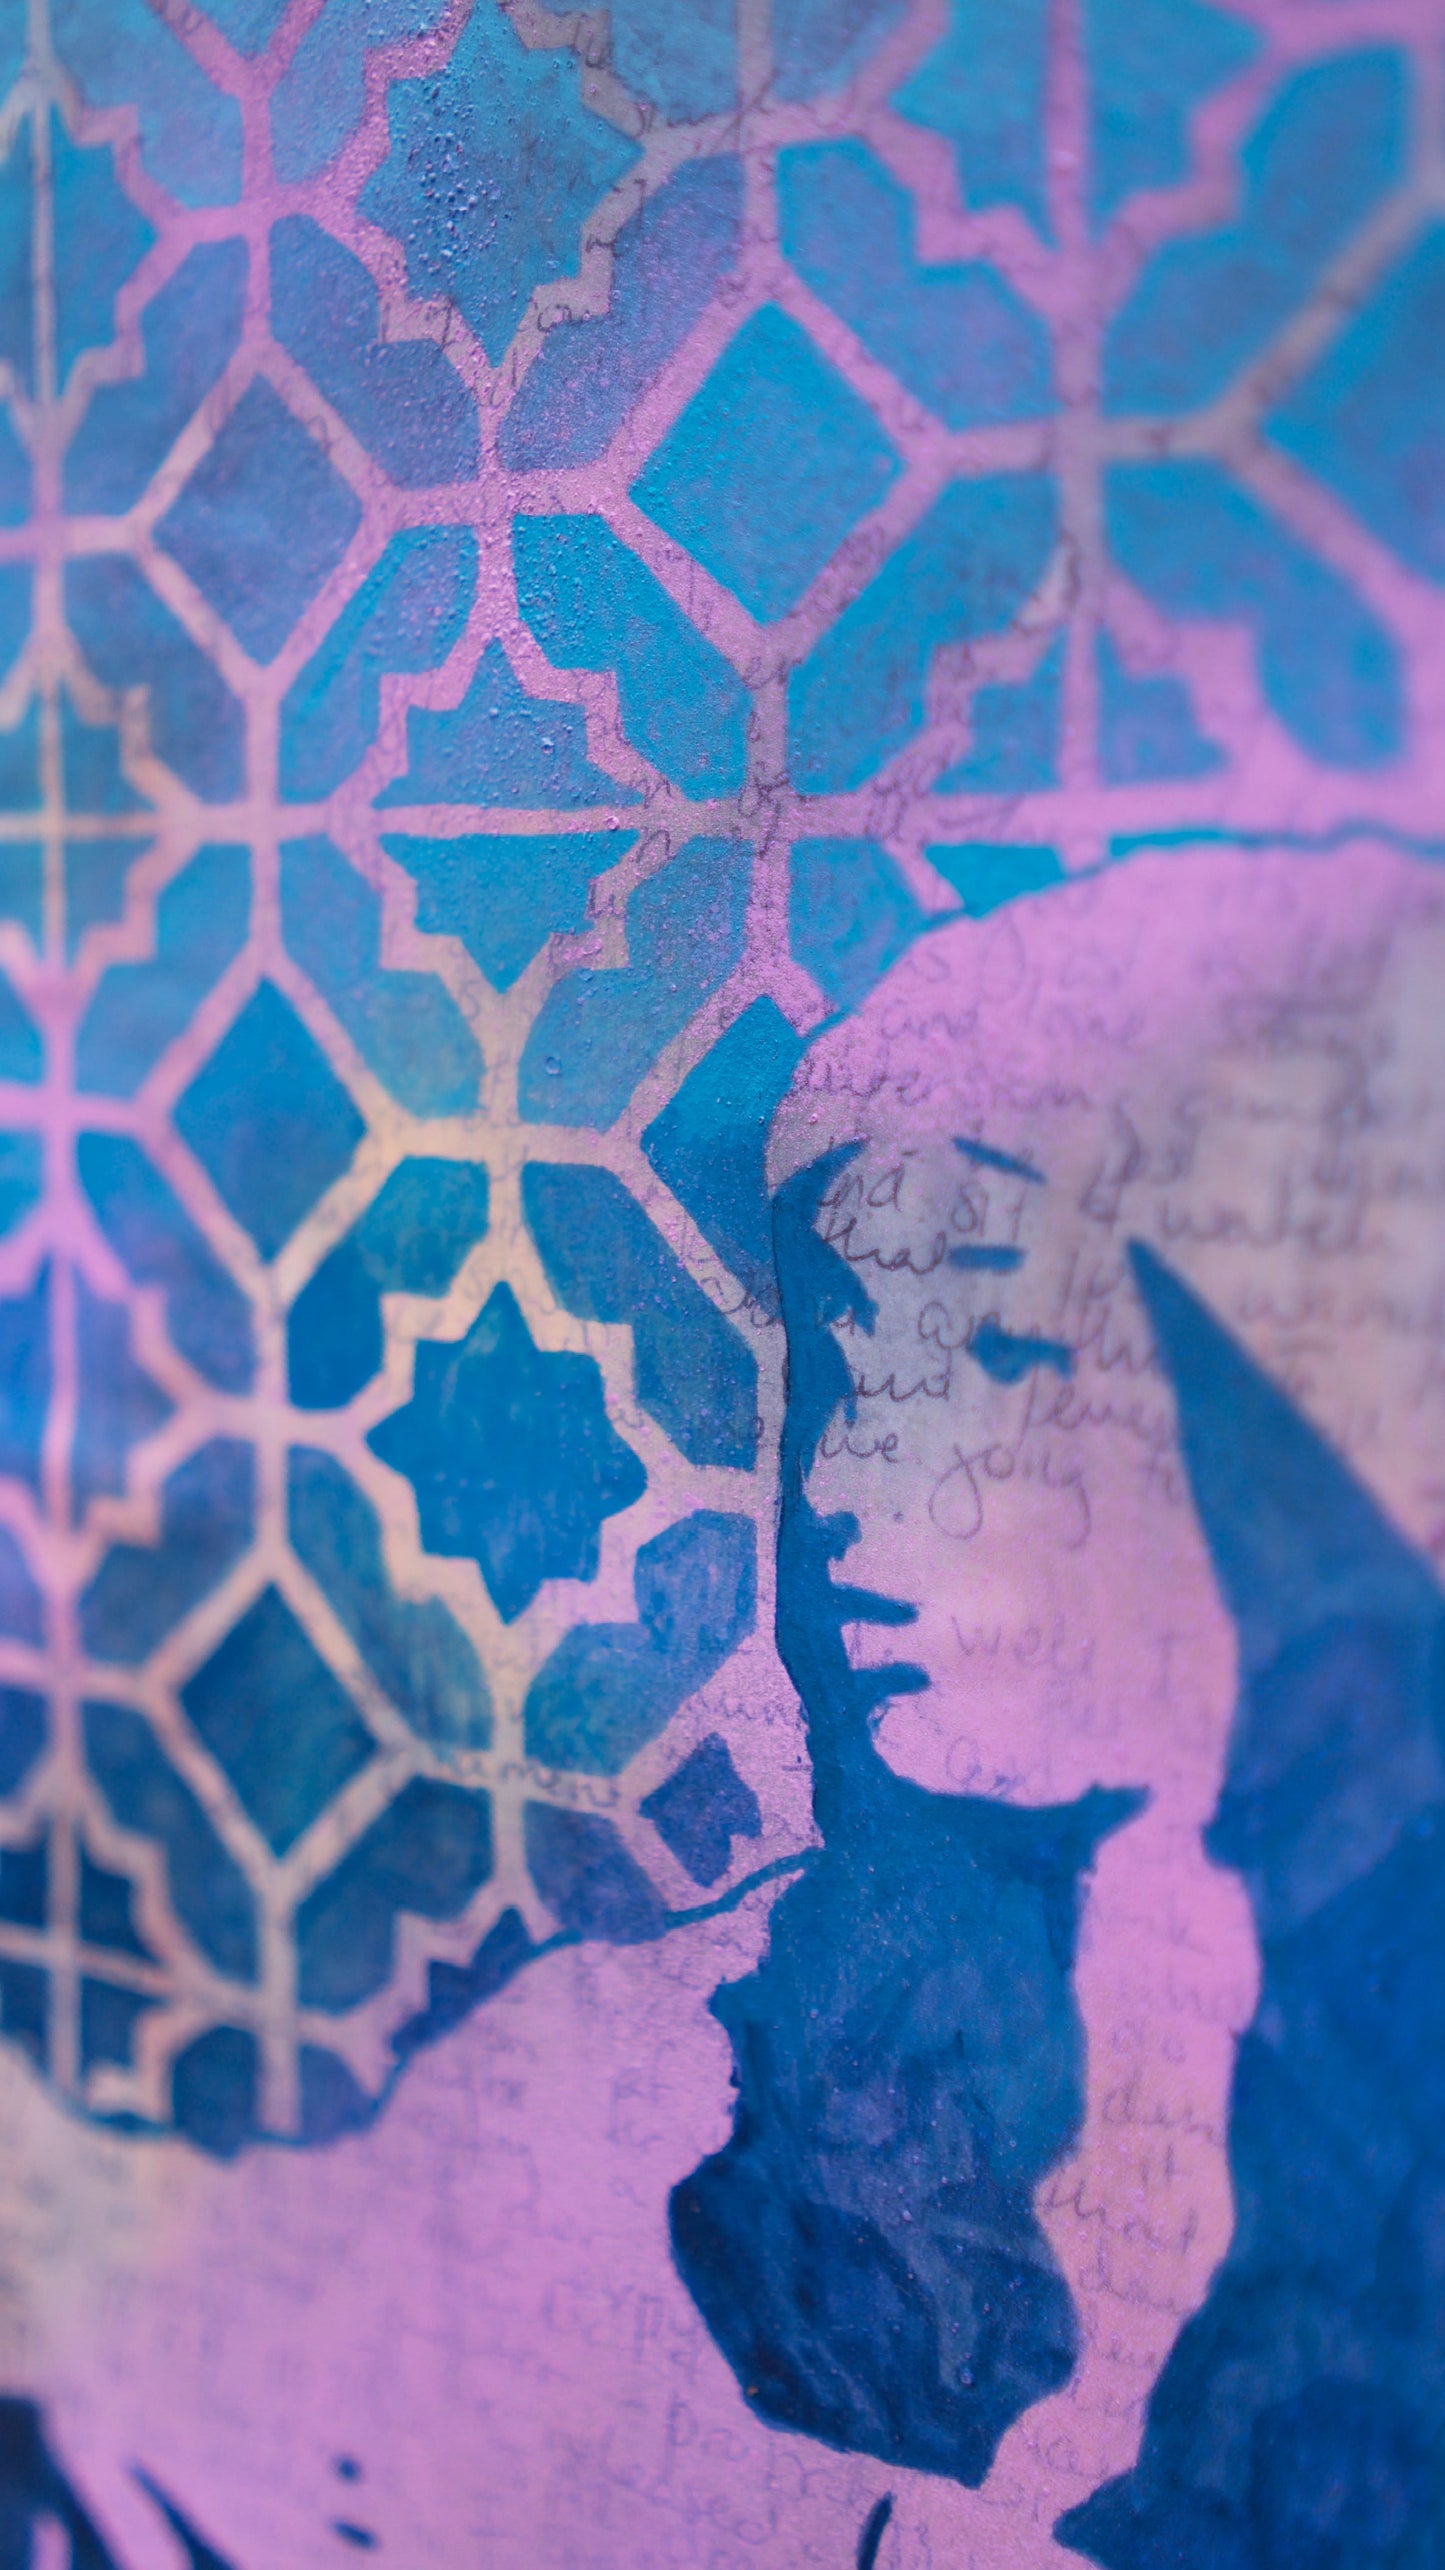 abstract art portait of a Woman on A4 Paper Pink & Blue Stencil Art Street Art Style melbourne wall art